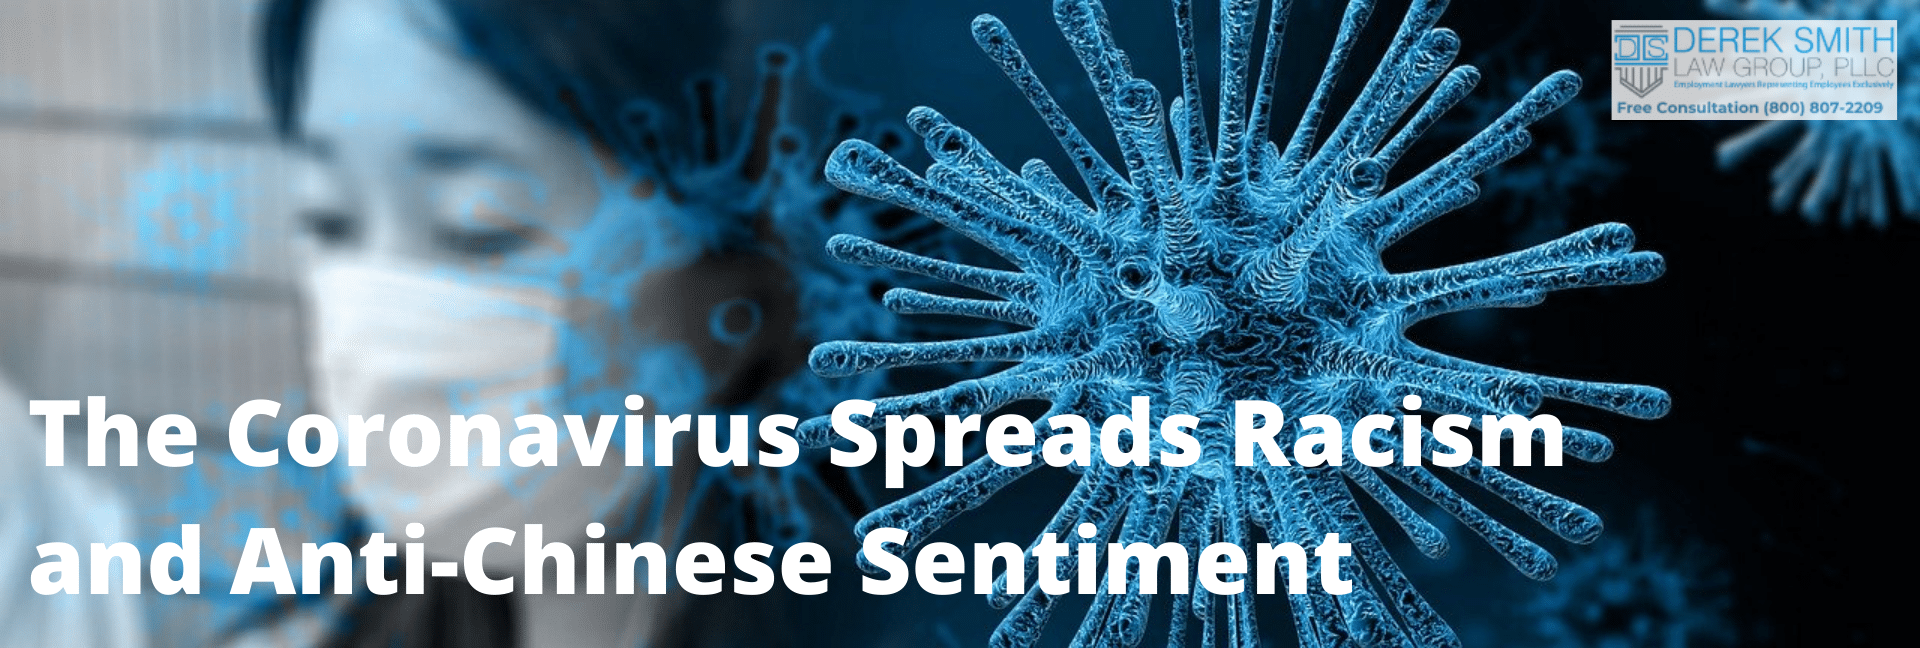 The Coronavirus Spreads Racism and Anti-Chinese Sentiment